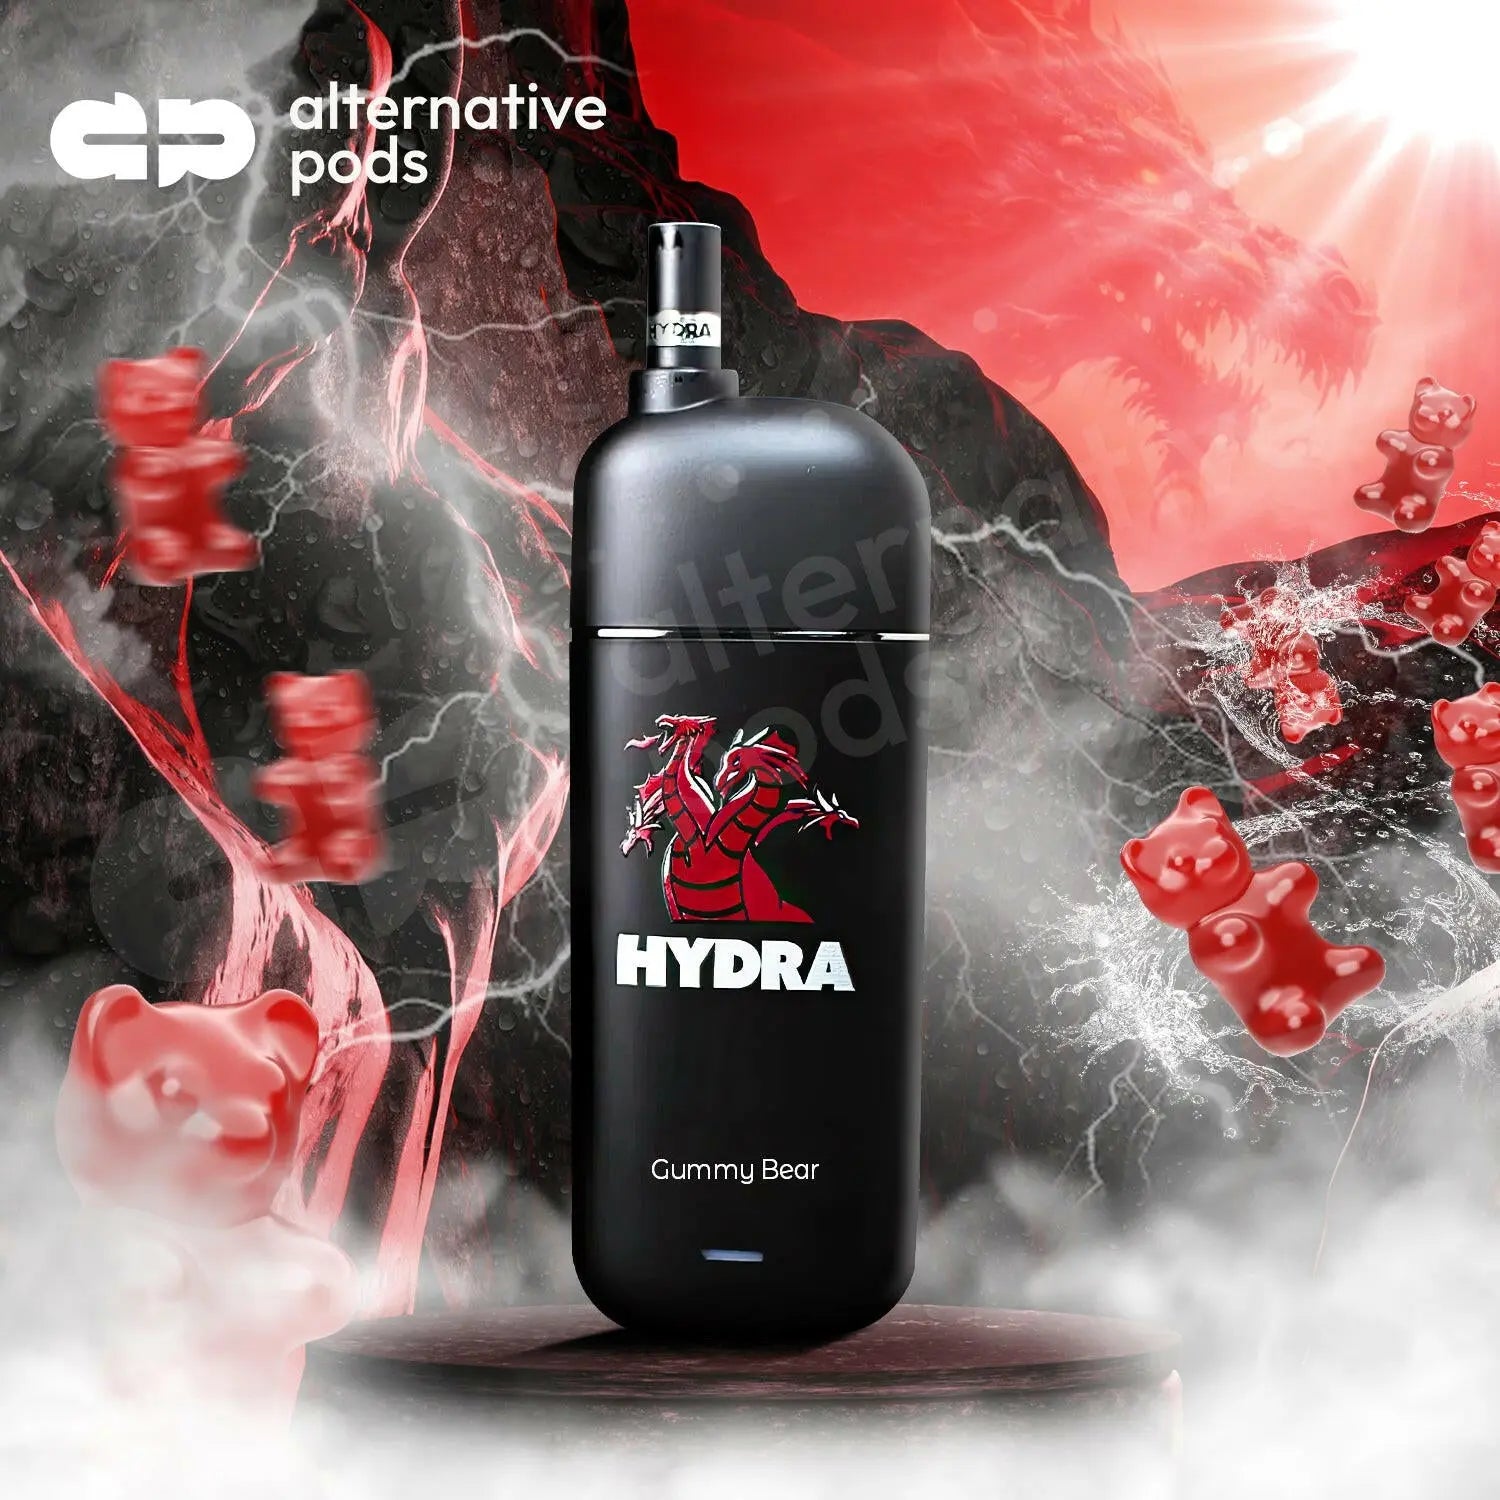 Hydra 5000 Puffs Disposable Vape with Filters 3% - Alternative pods | Online Vape & Smoke Shop